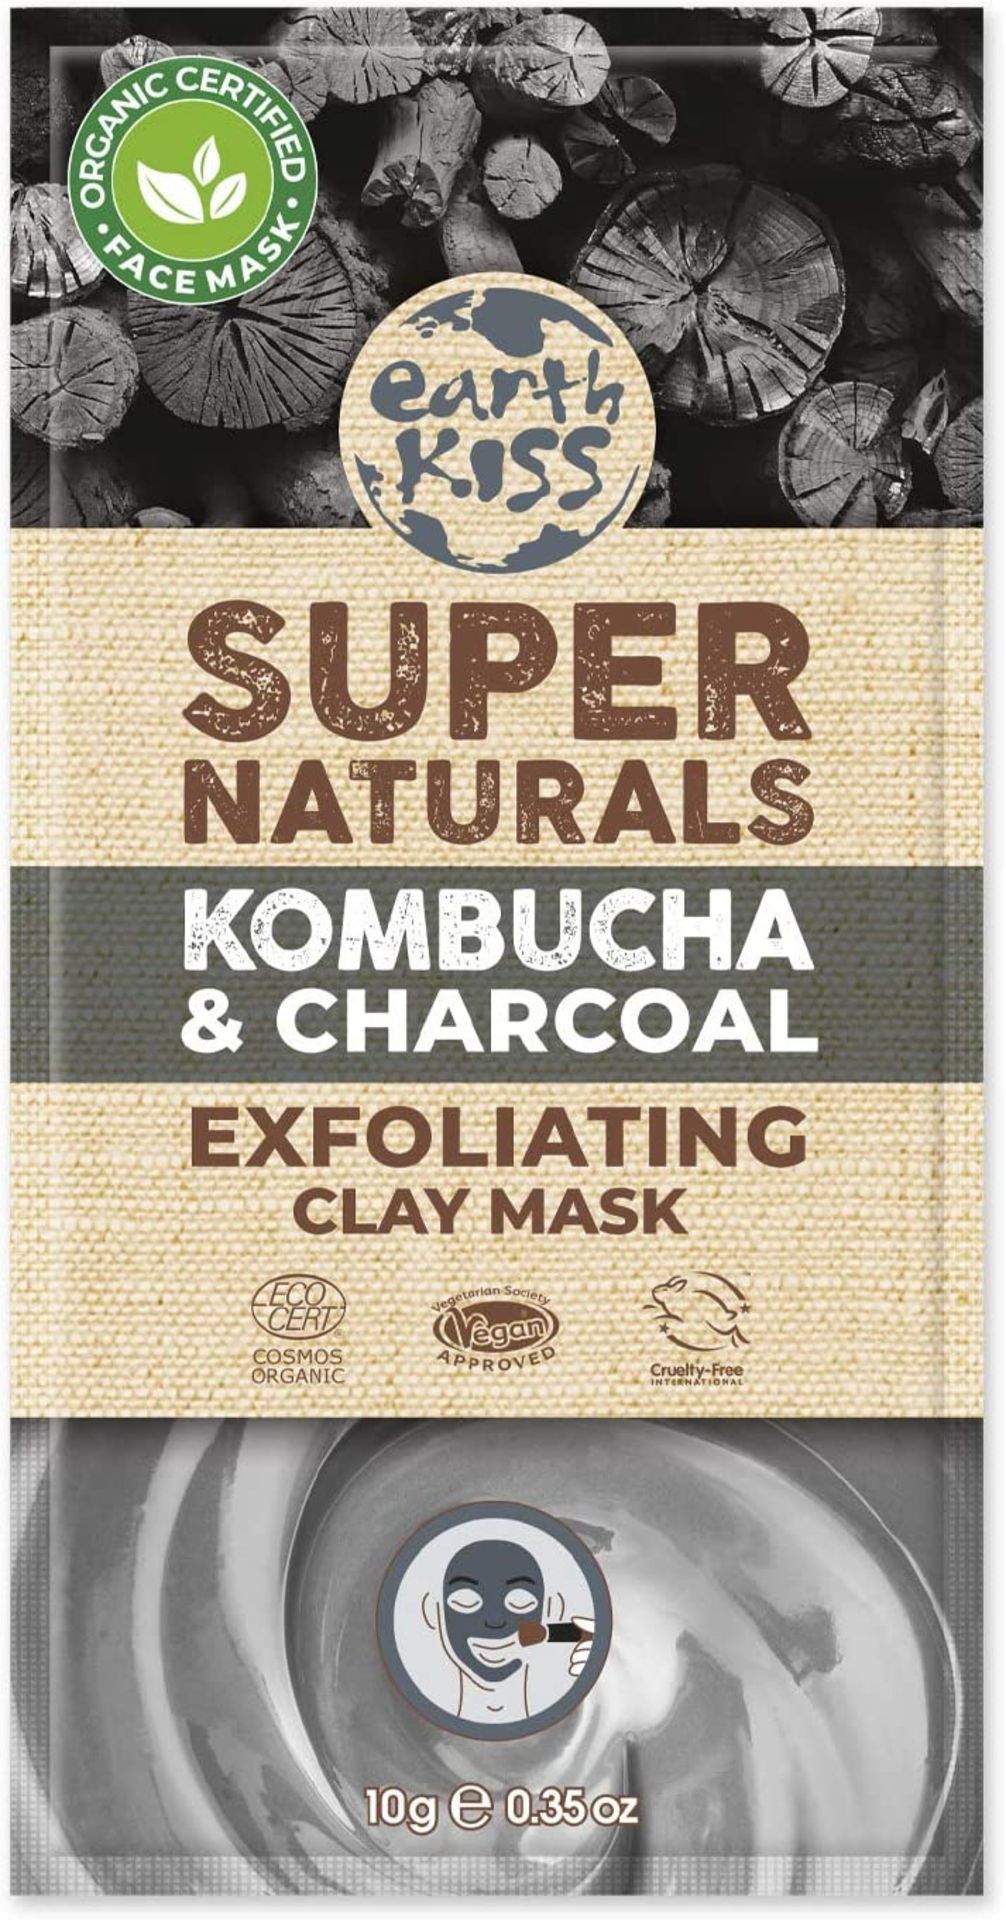 336 x BRAND NEW Earth Kiss Kombucha and Charcoal Mask 1 Sachet - PW